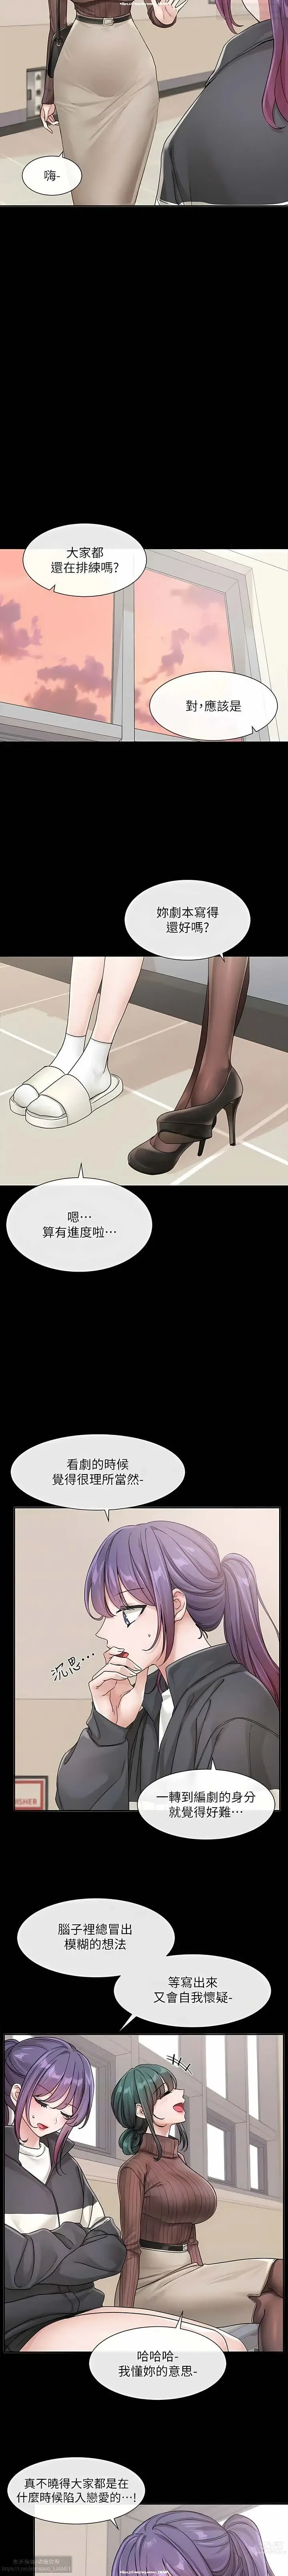 Page 3 of manga 社團學姊 127-137 官方中文 社团学姐